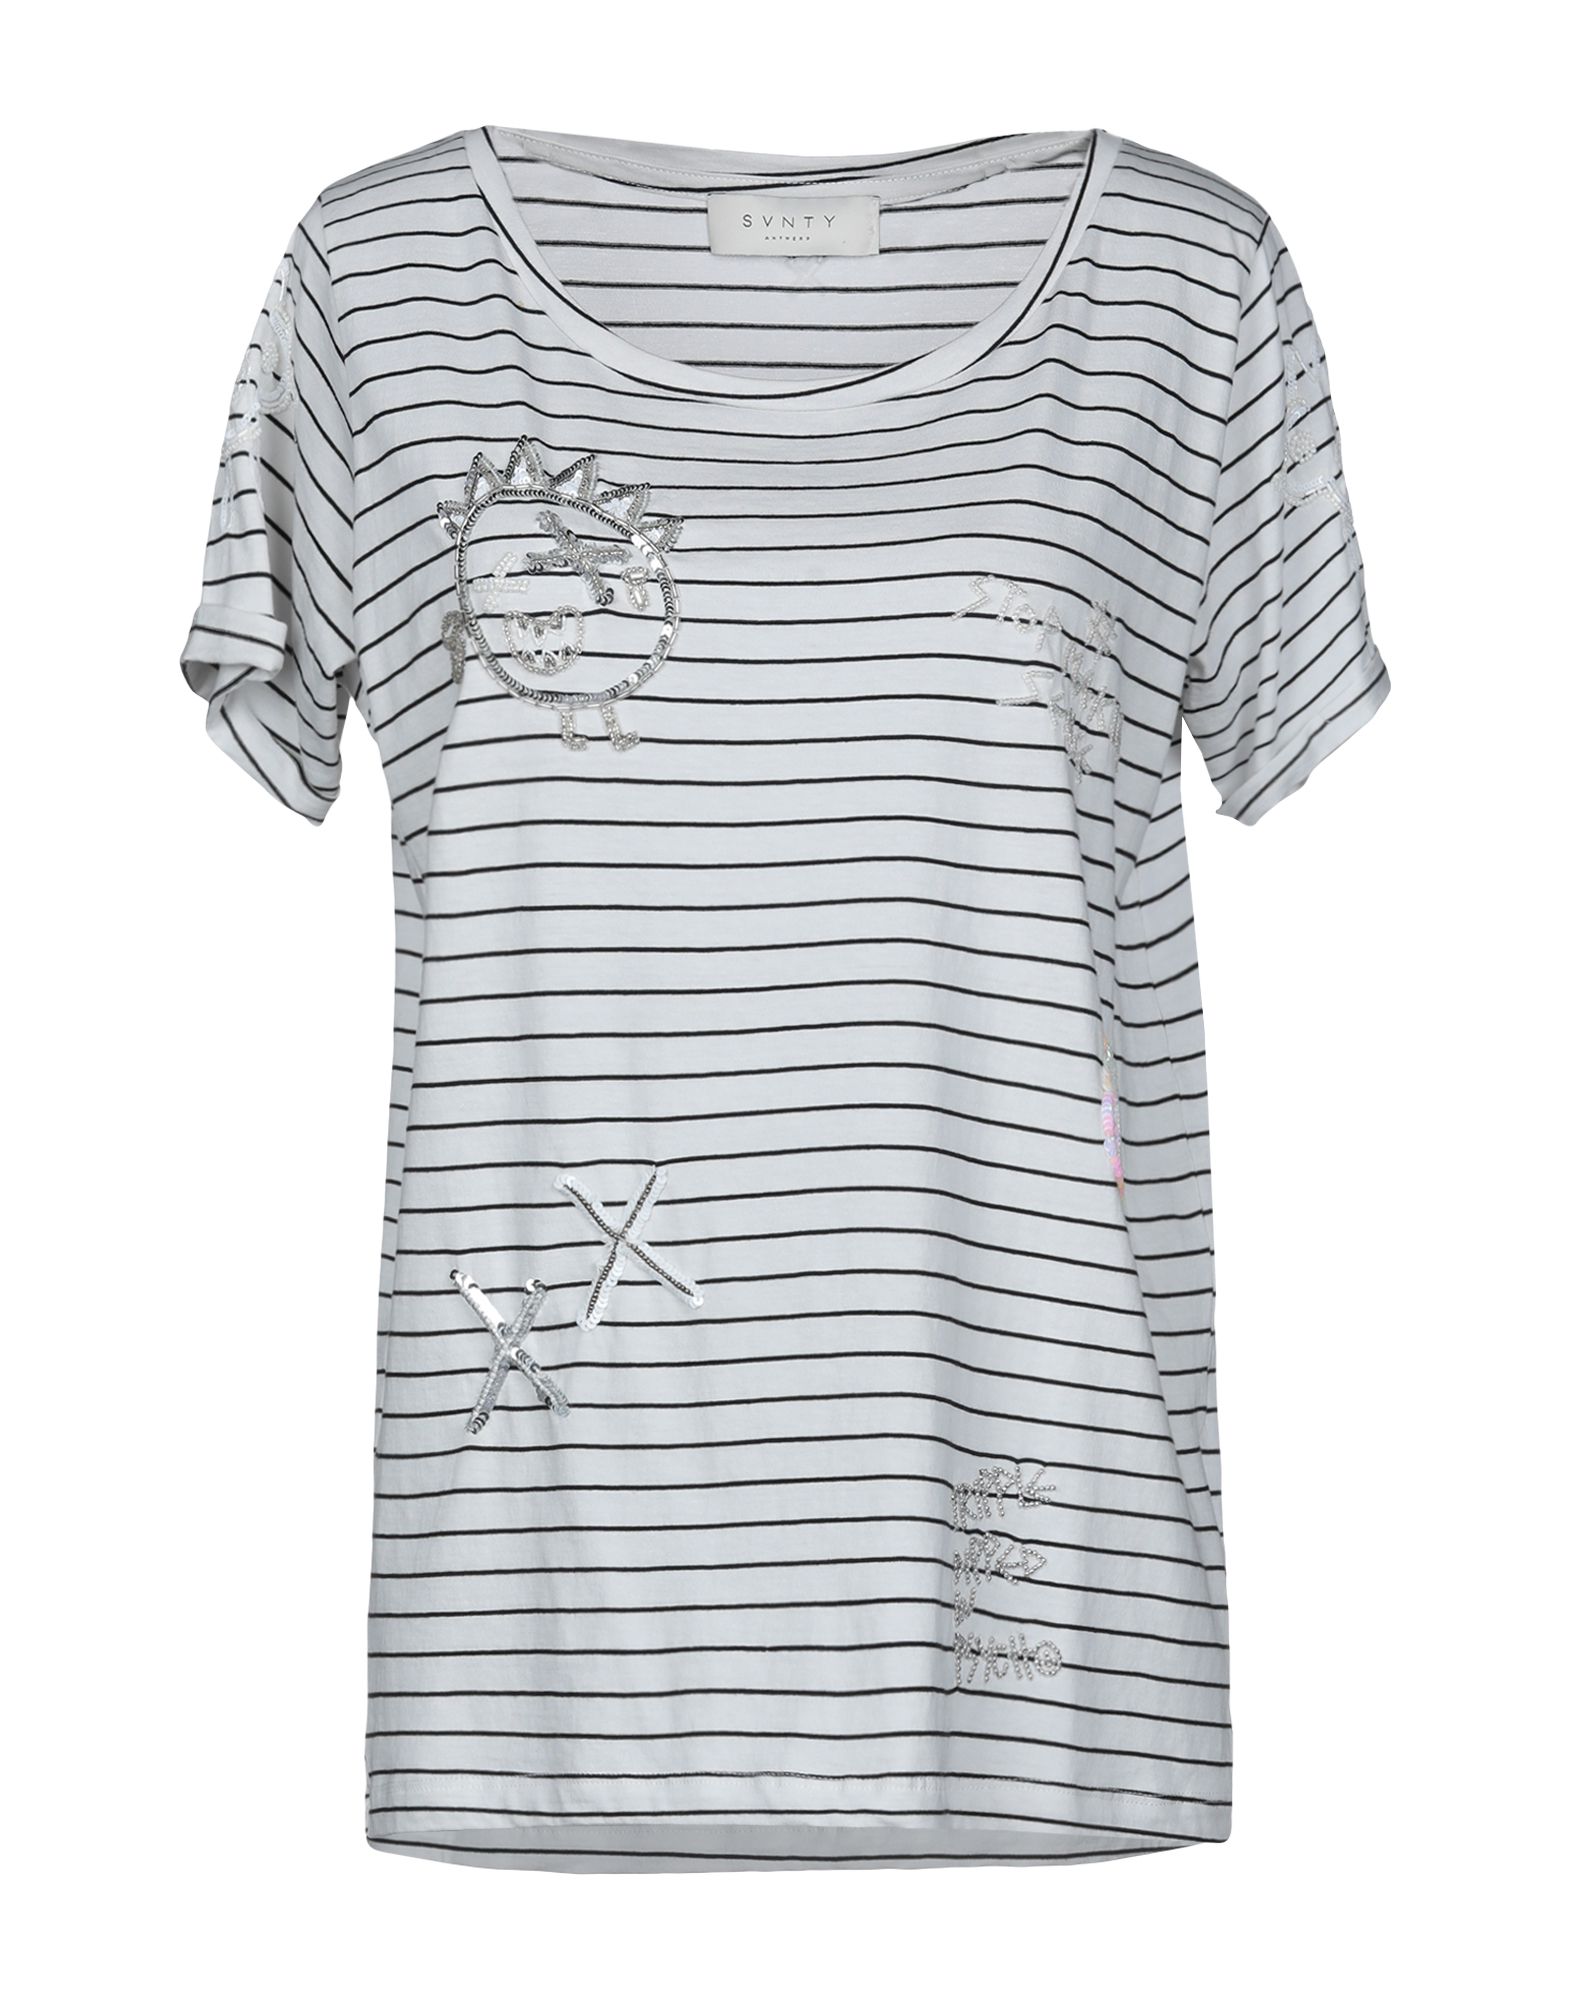 Svnty T-shirt In Light Grey | ModeSens